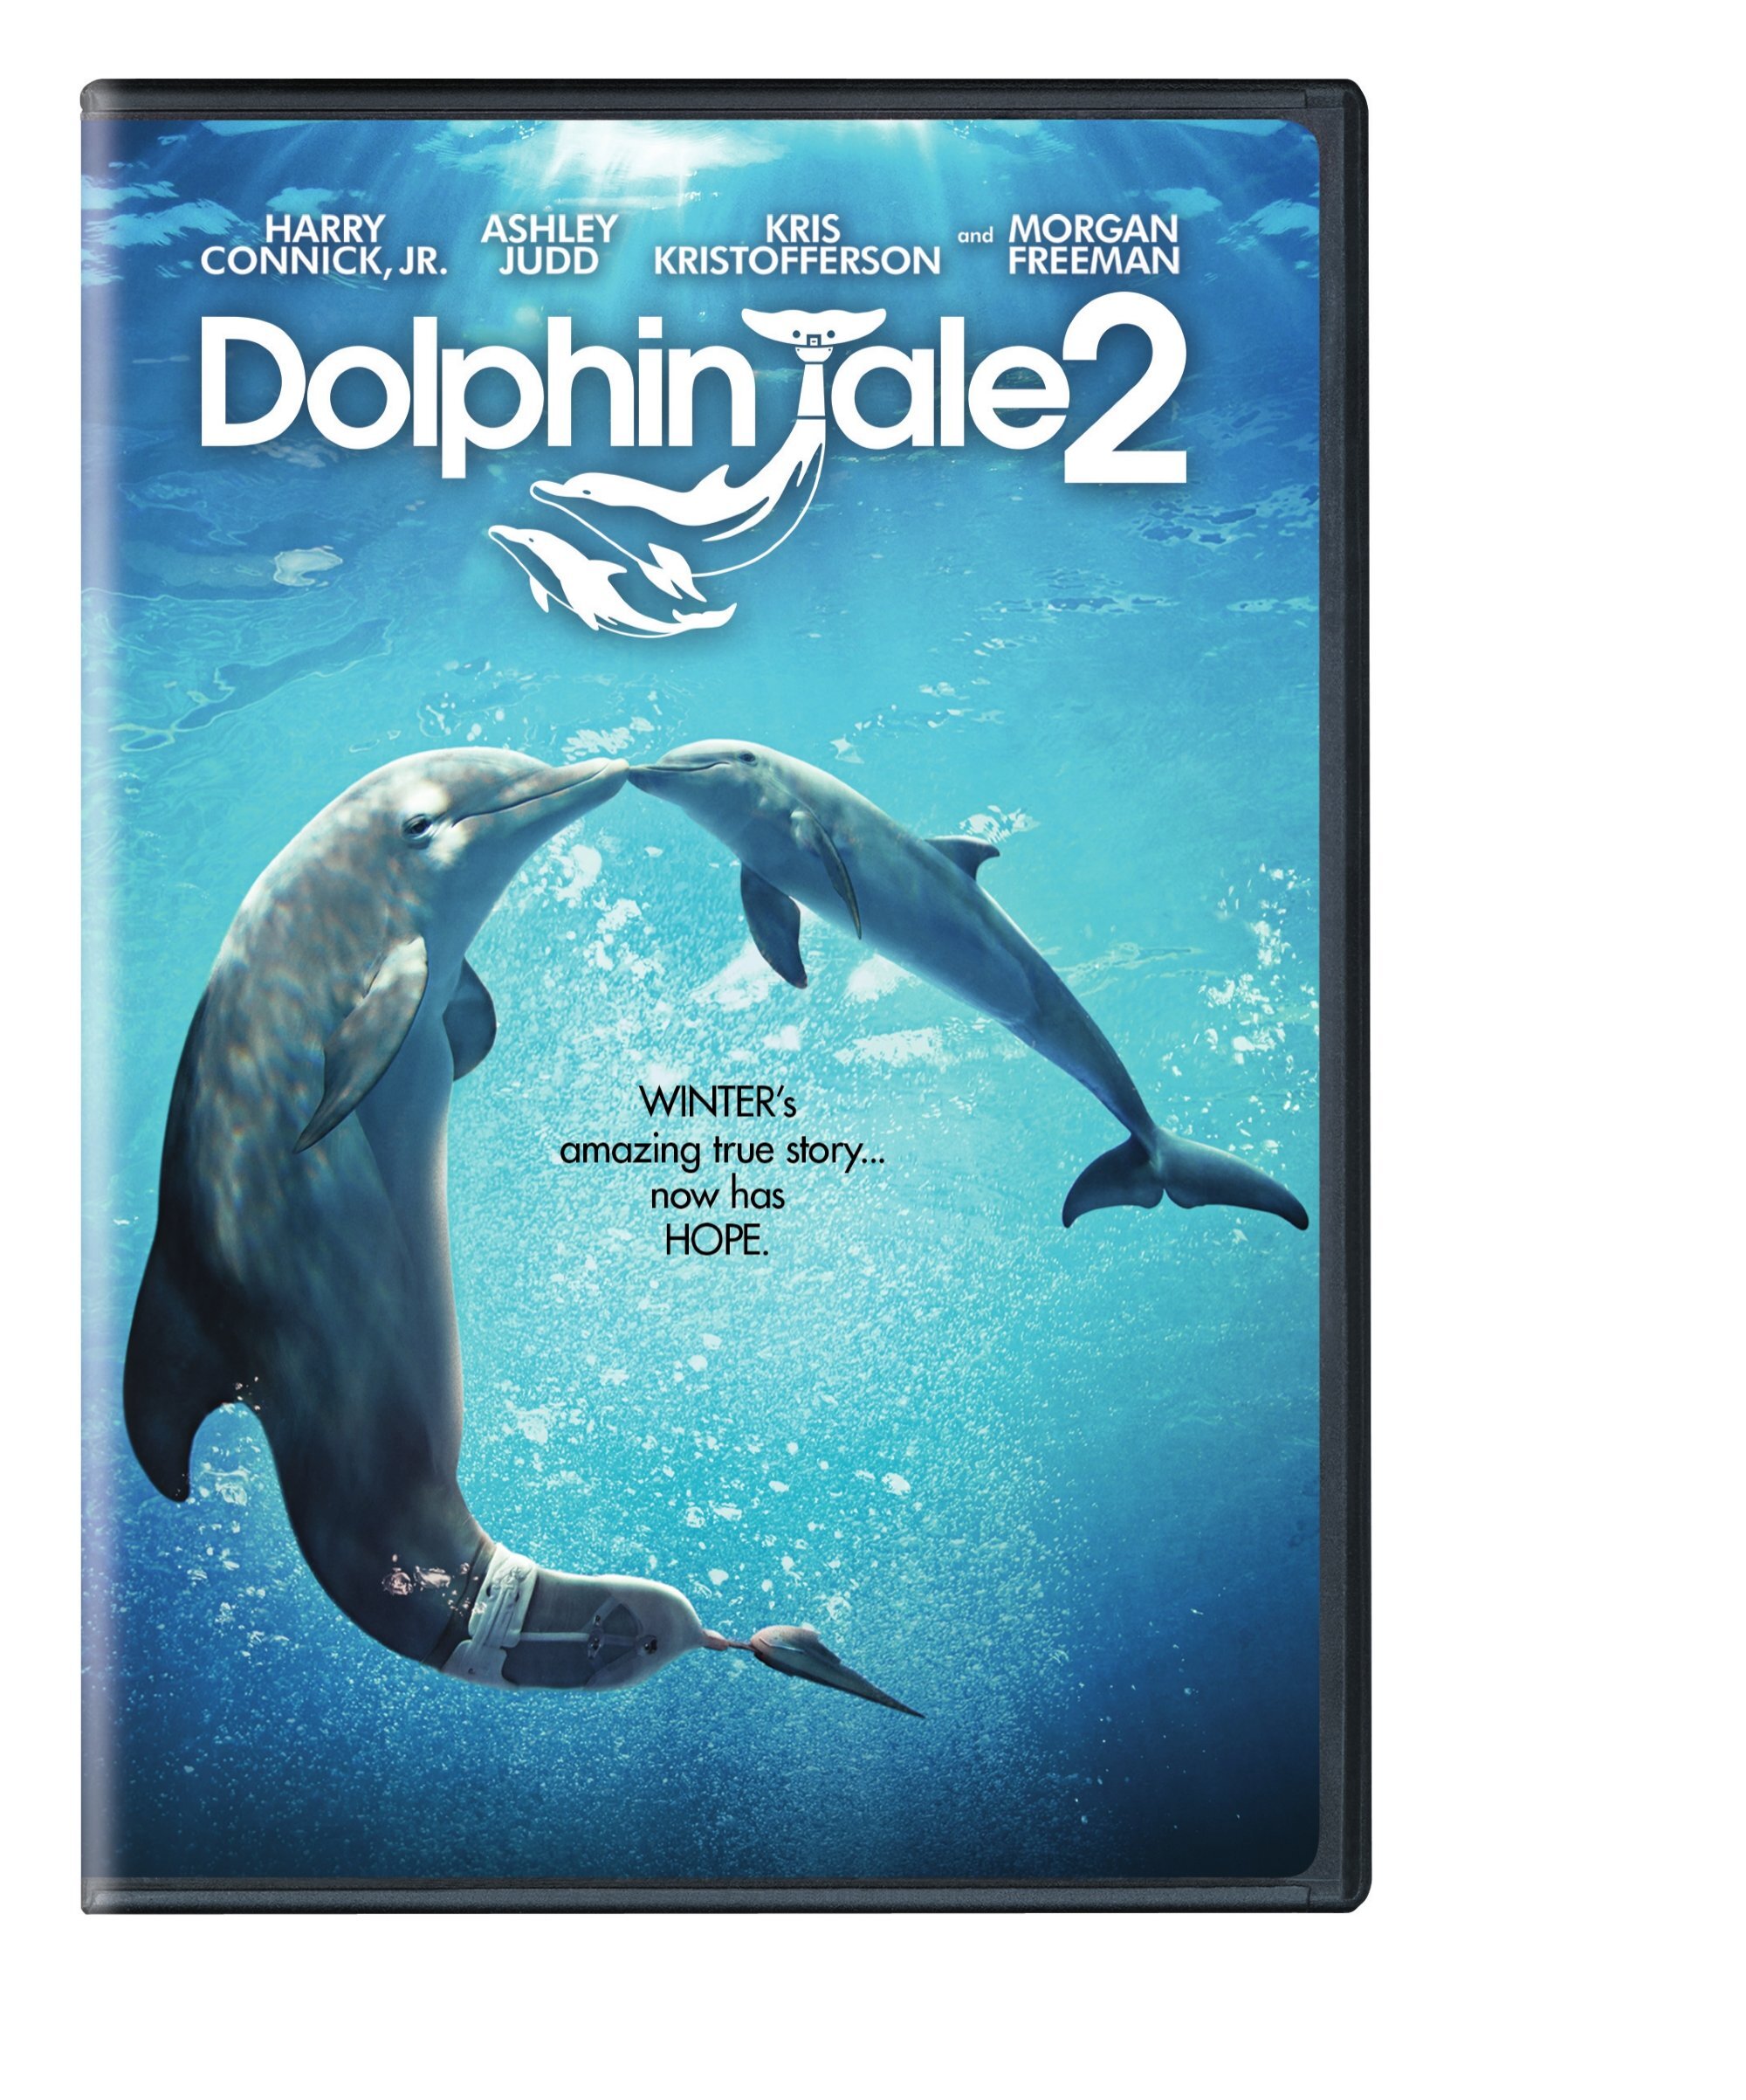 Dolphin Tale 2 - DVD [ 2014 ]  - Drama Movies On DVD - Movies On GRUV